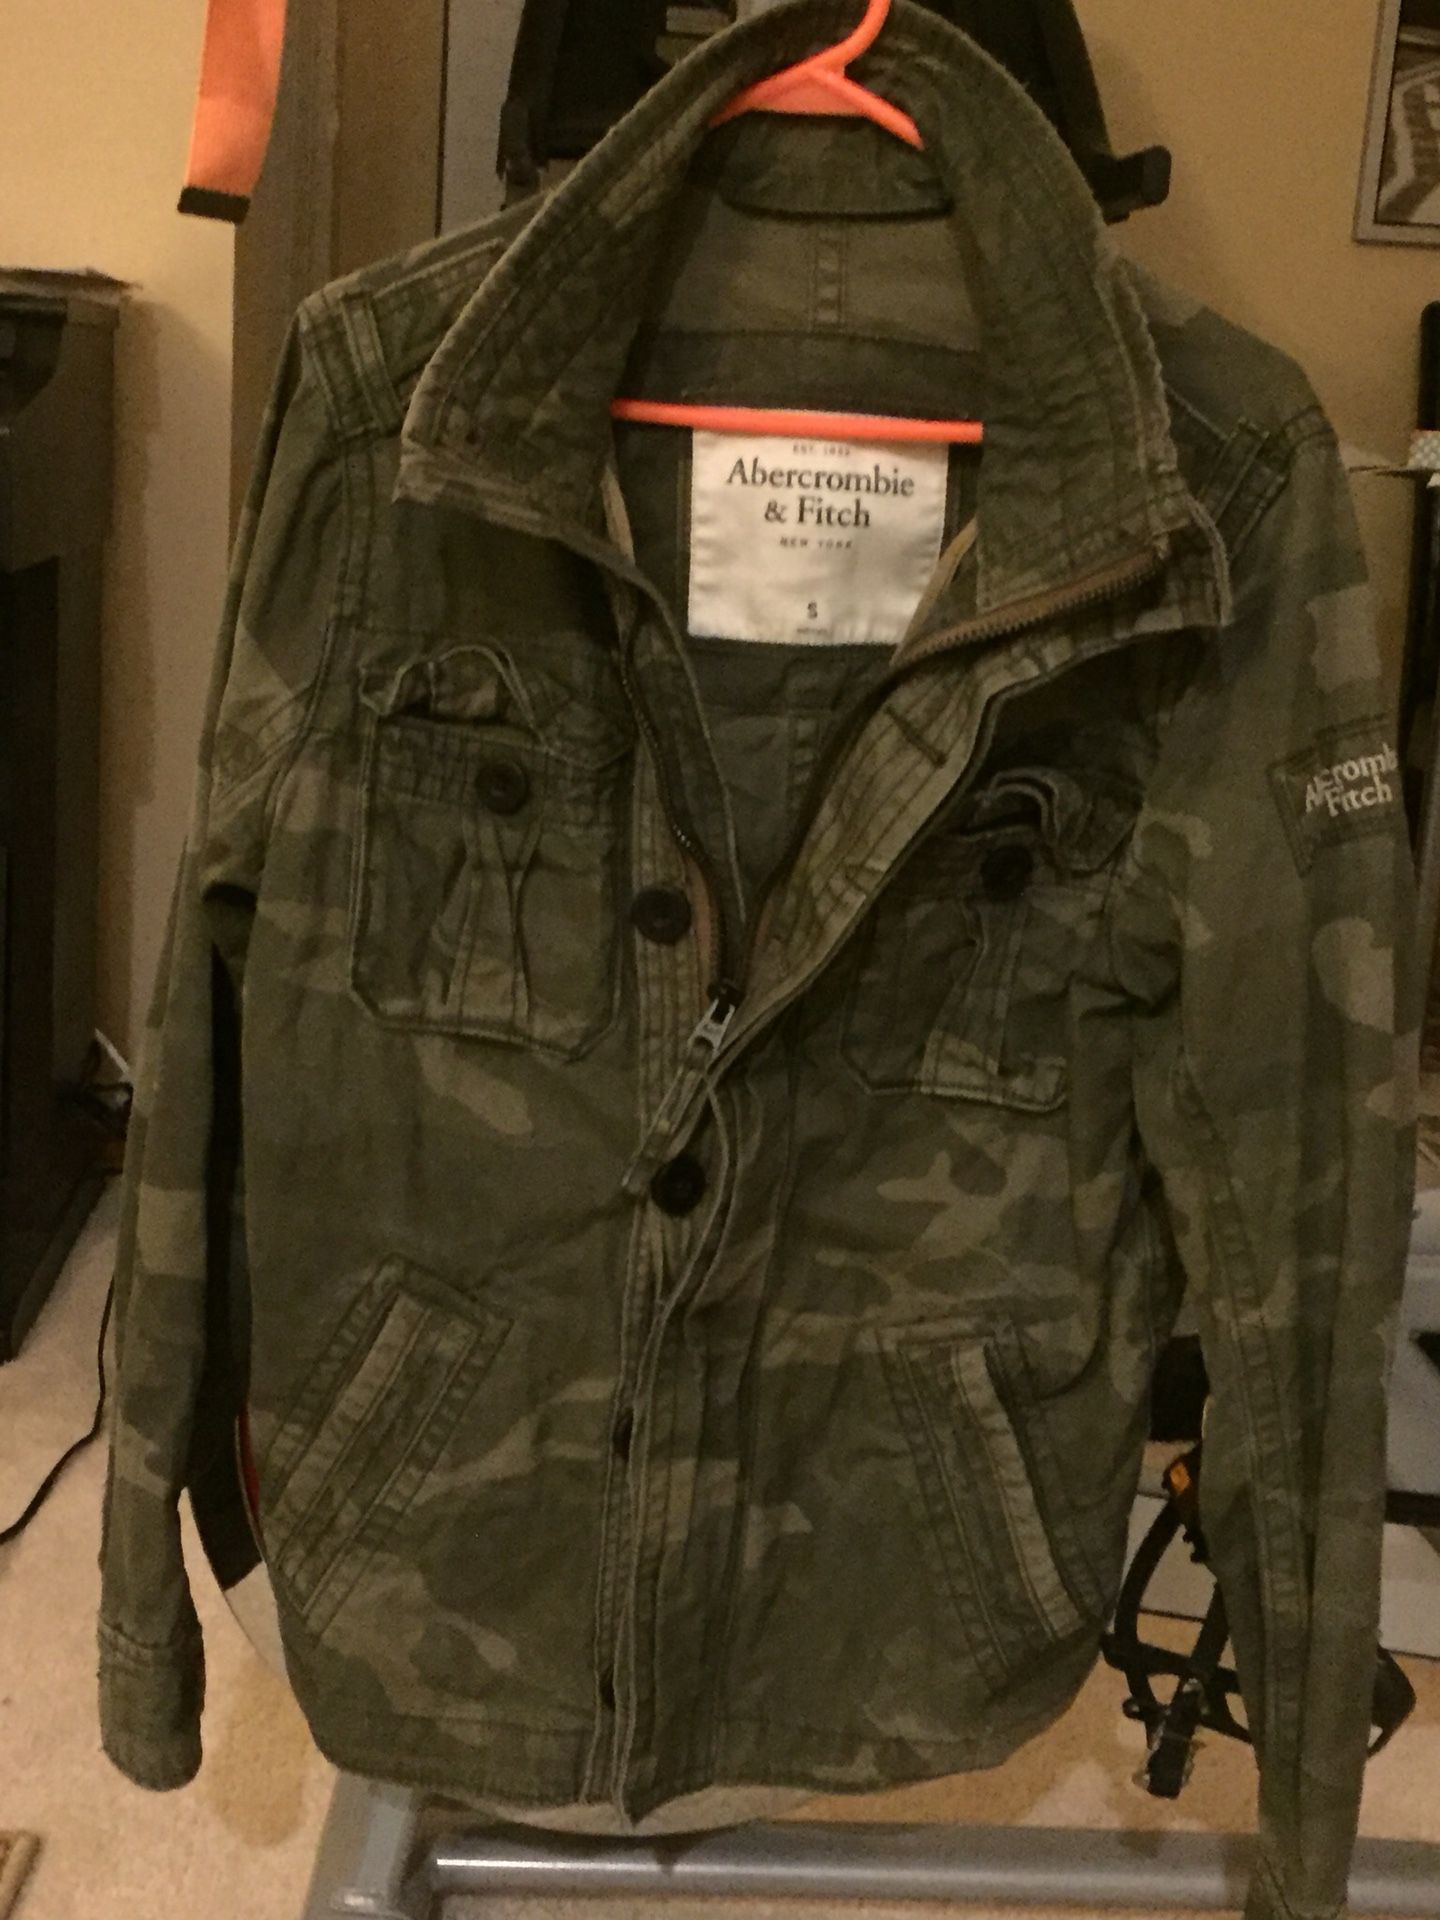 Abercrombie & Fitch Camo Jacket for Sale in Auburn, WA - OfferUp